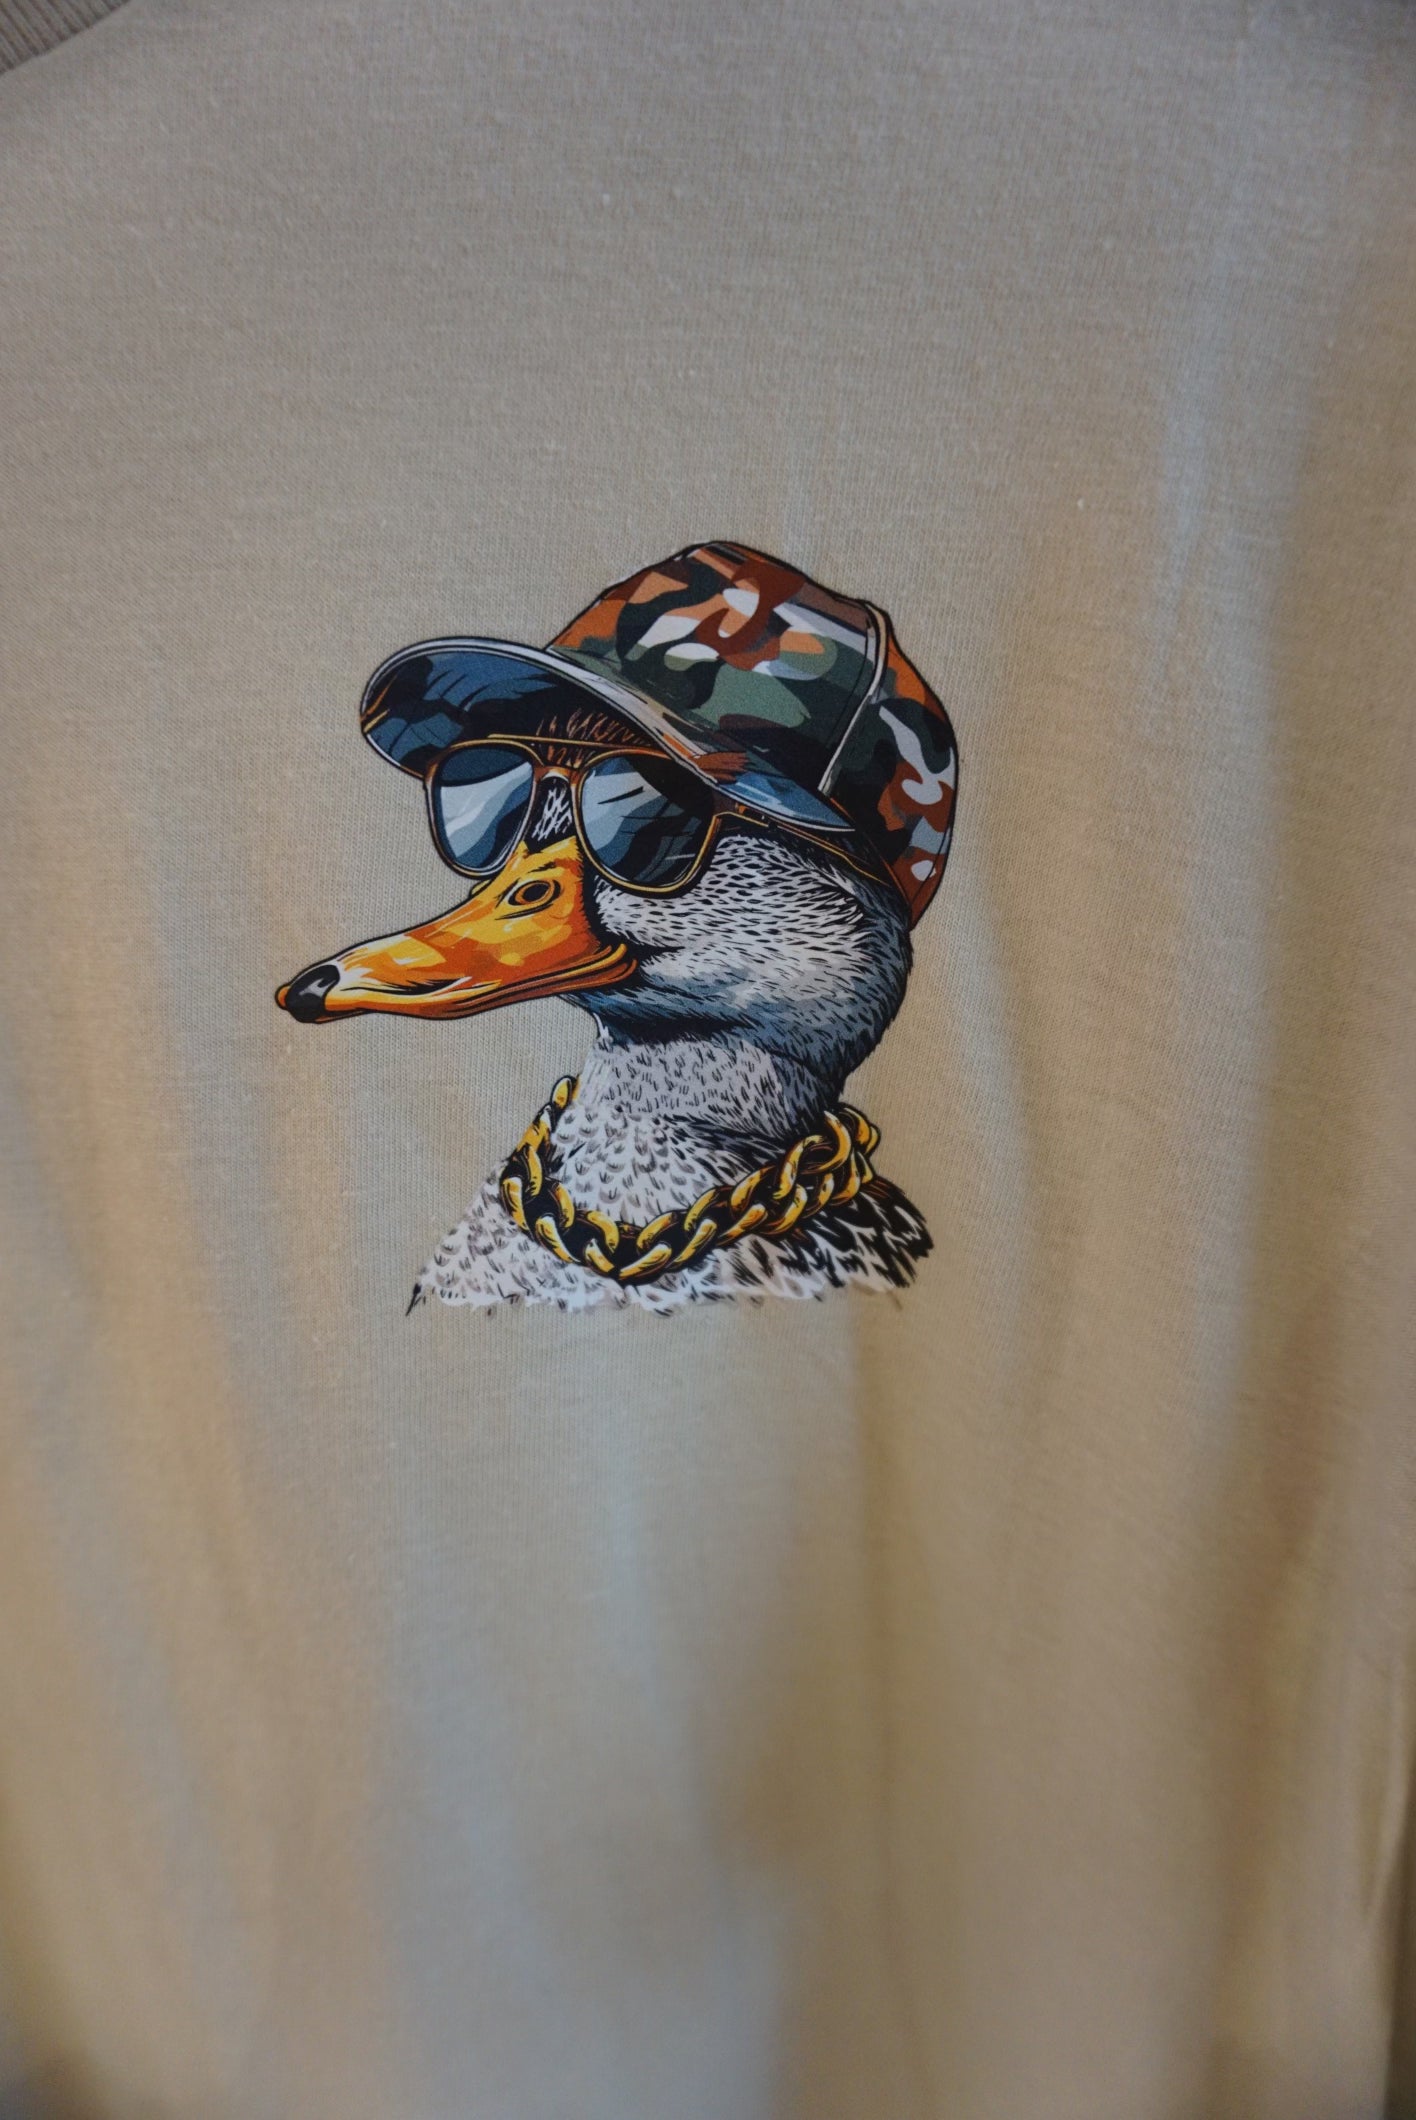 Smokin' Quack T-shirt